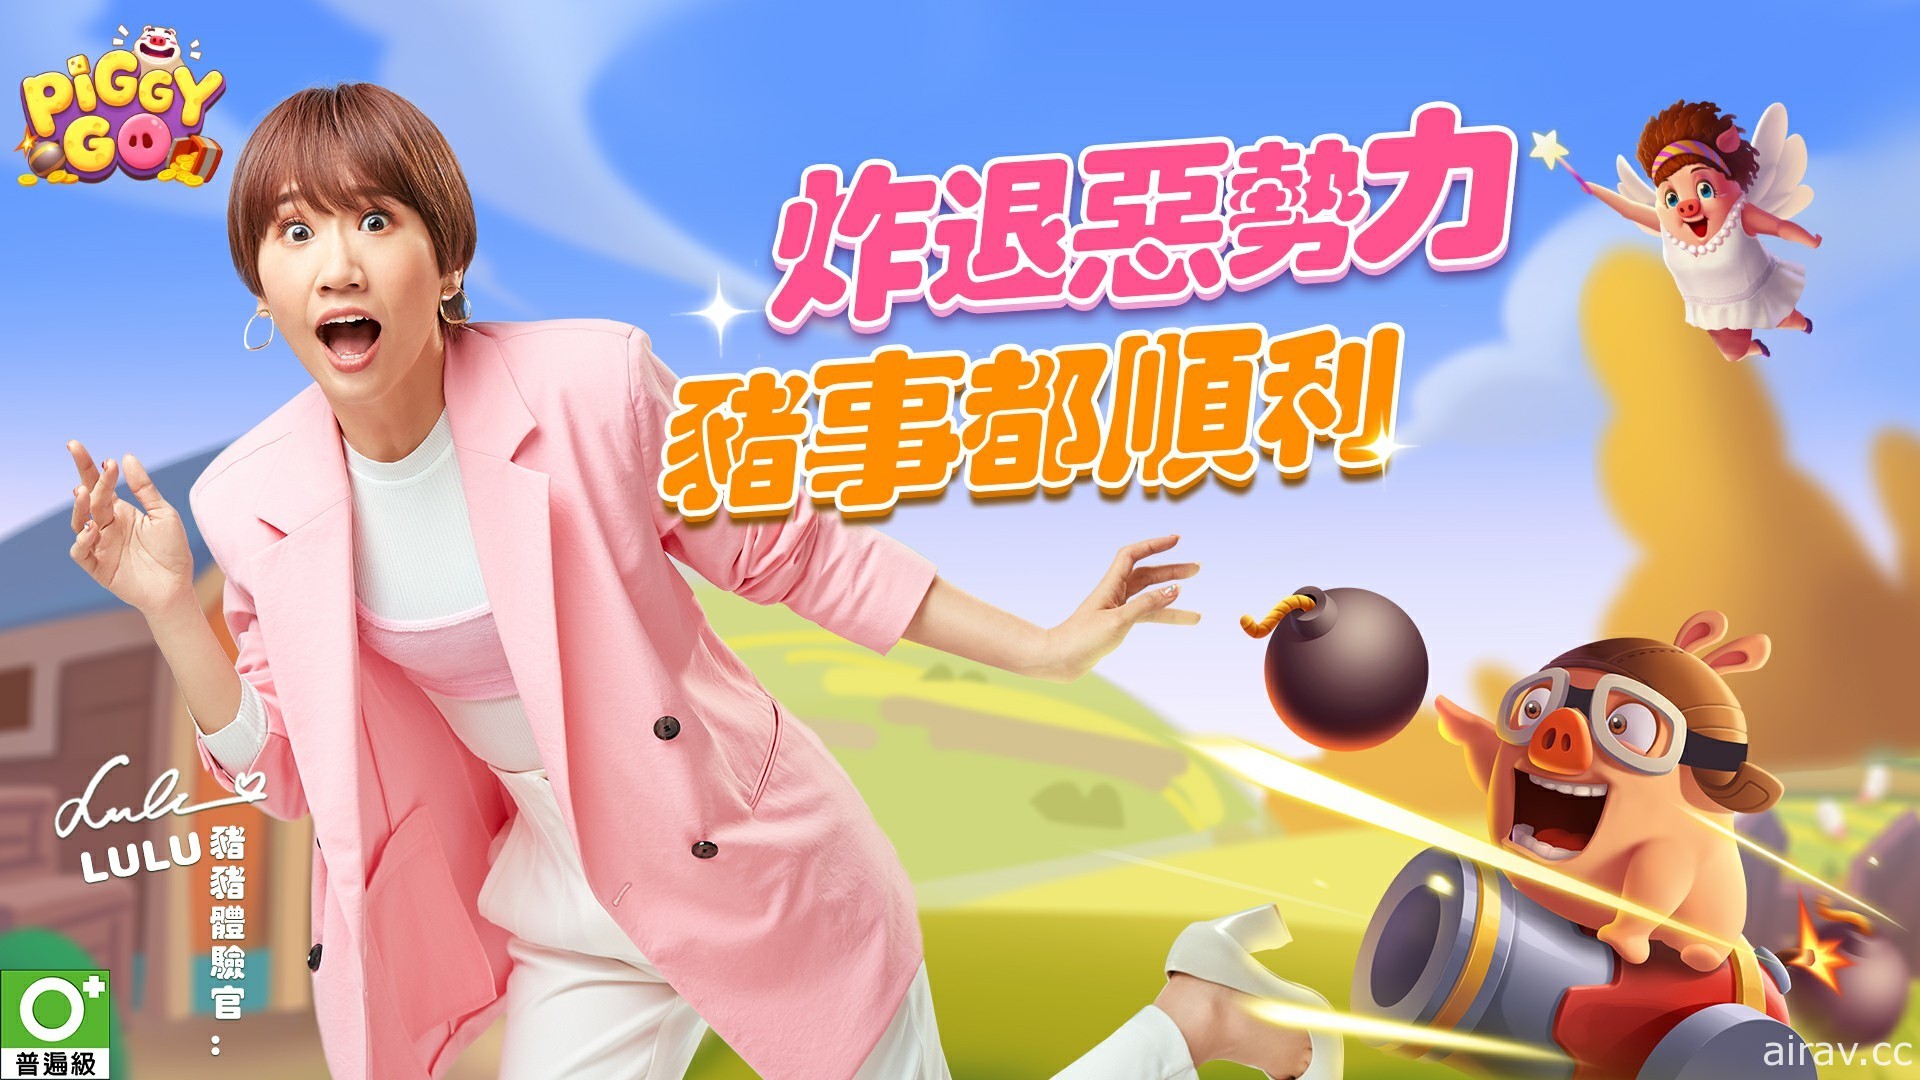 《Piggy Go 猪游记》释出宣传影片 同步公开游戏代言人